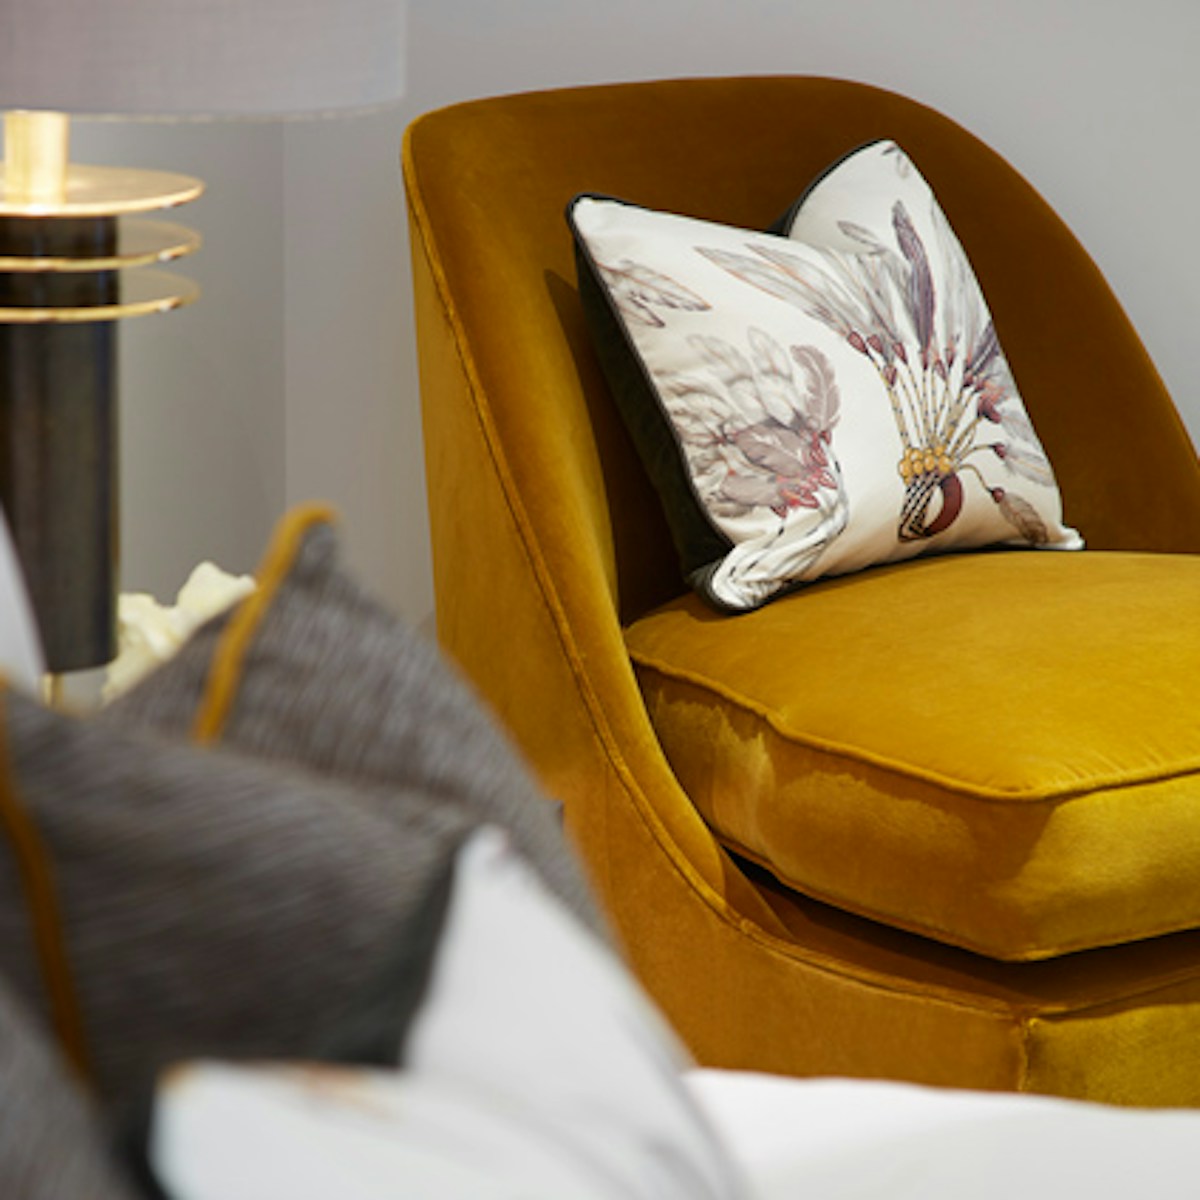 Mustard Yellow Upholstery | 9 Ways to Use Mustard | Mustard Yellow Room Ideas | LuxDeco.com